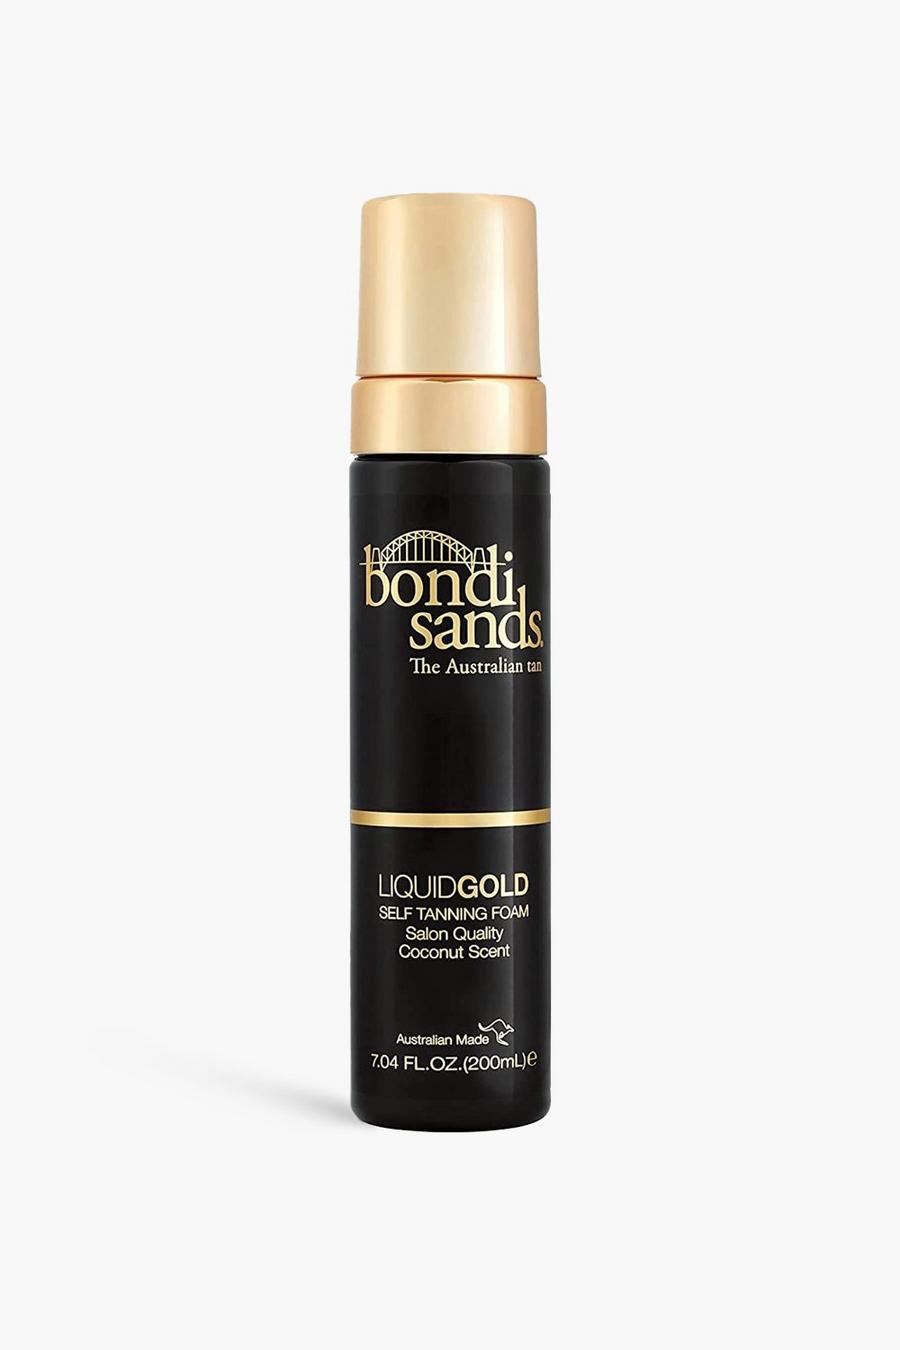 05 golden Bondi Sands Liquid Gold Tanning Brun utan sol Skum